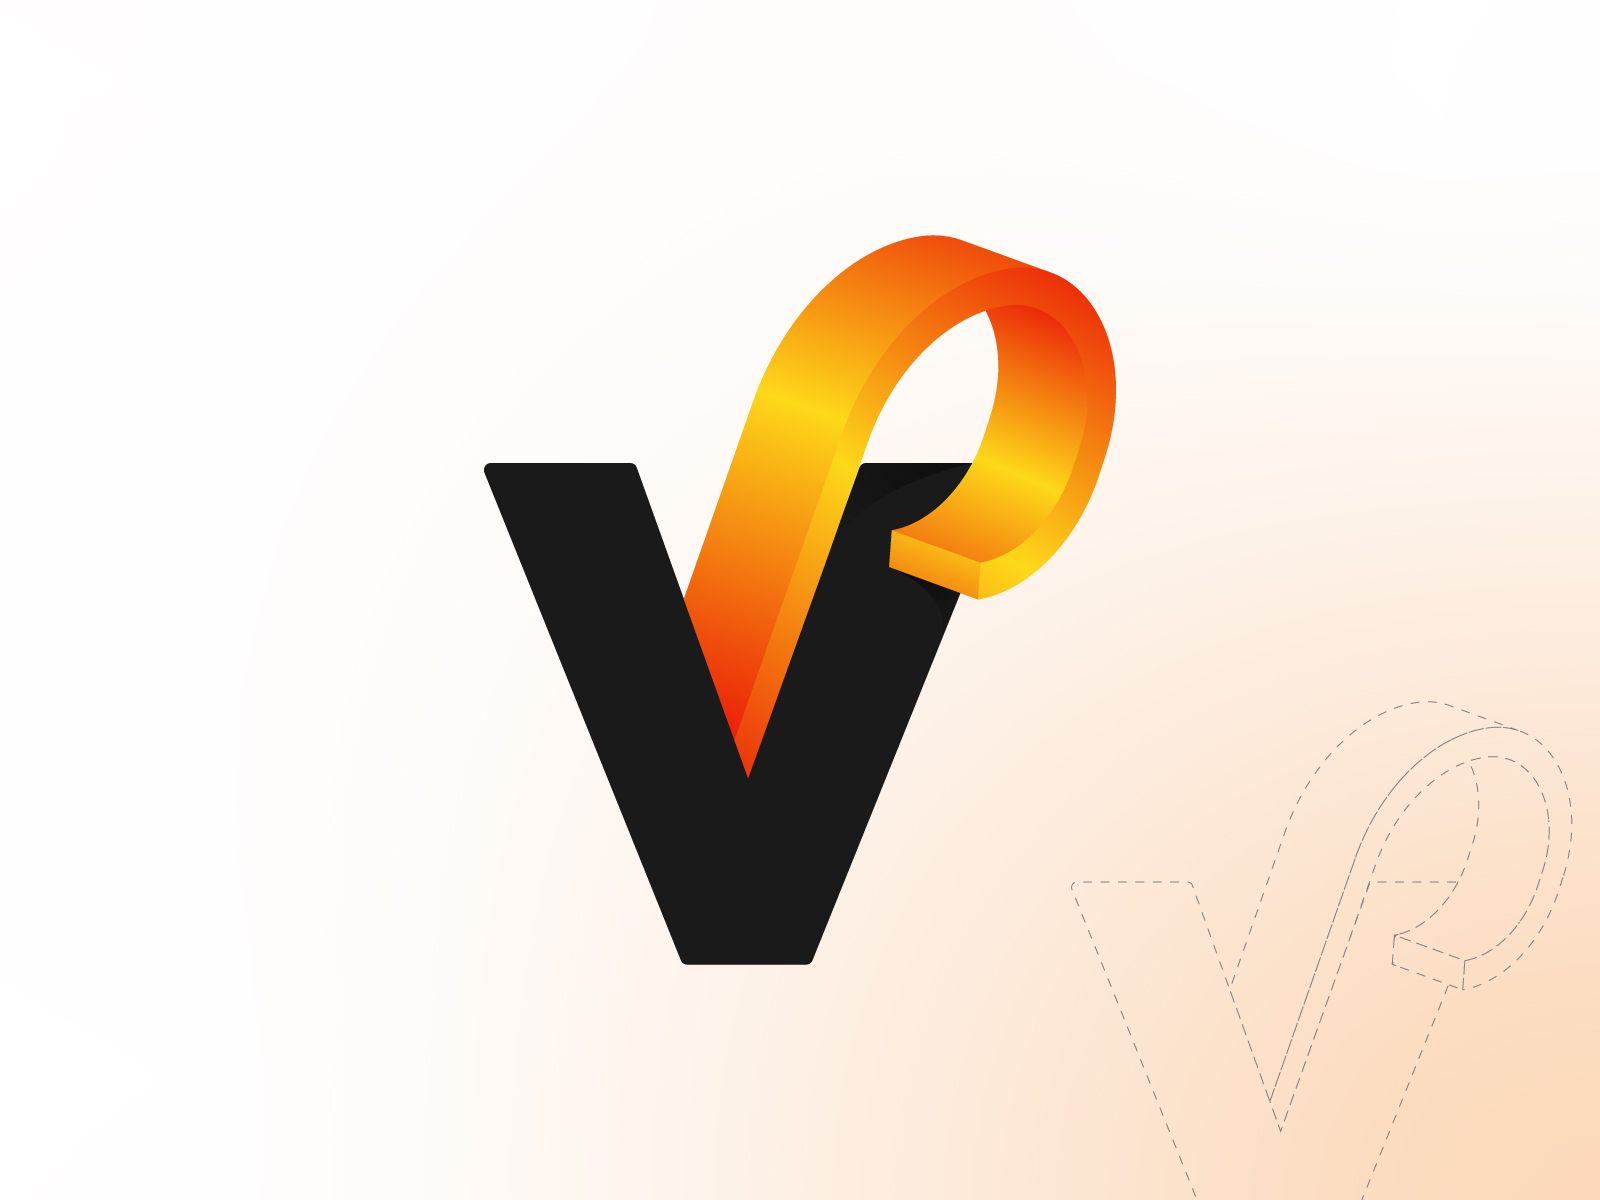 VP logo by initiallogo on Dribbble